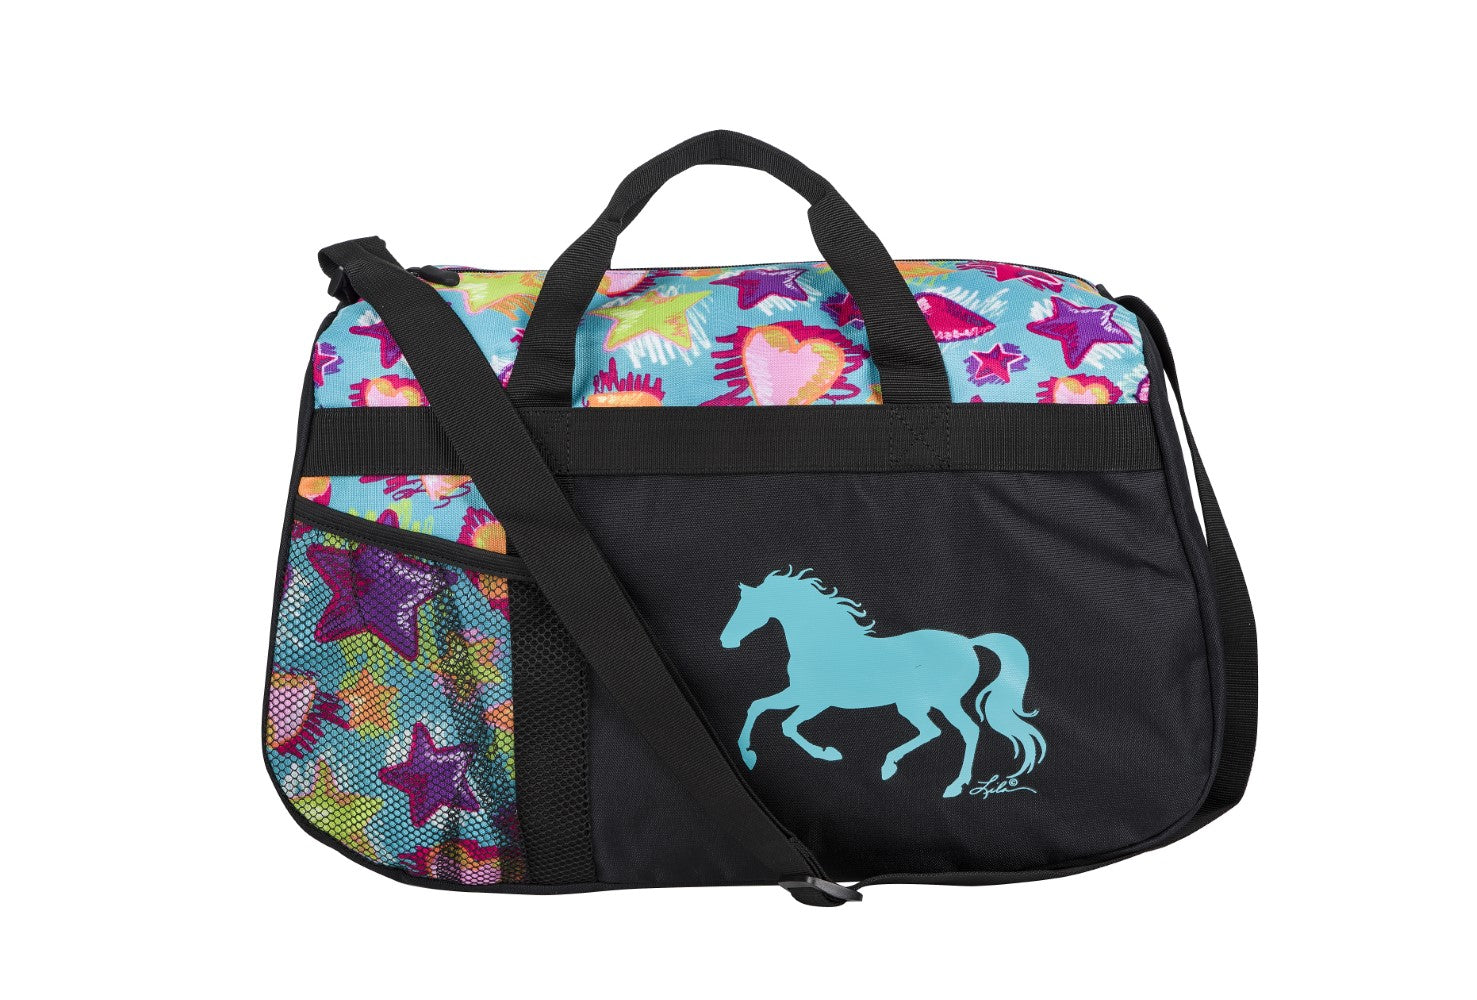 AWST Int'l "Lila" Galloping Horse Duffle Bag- Stars & Hearts - Breeches.com